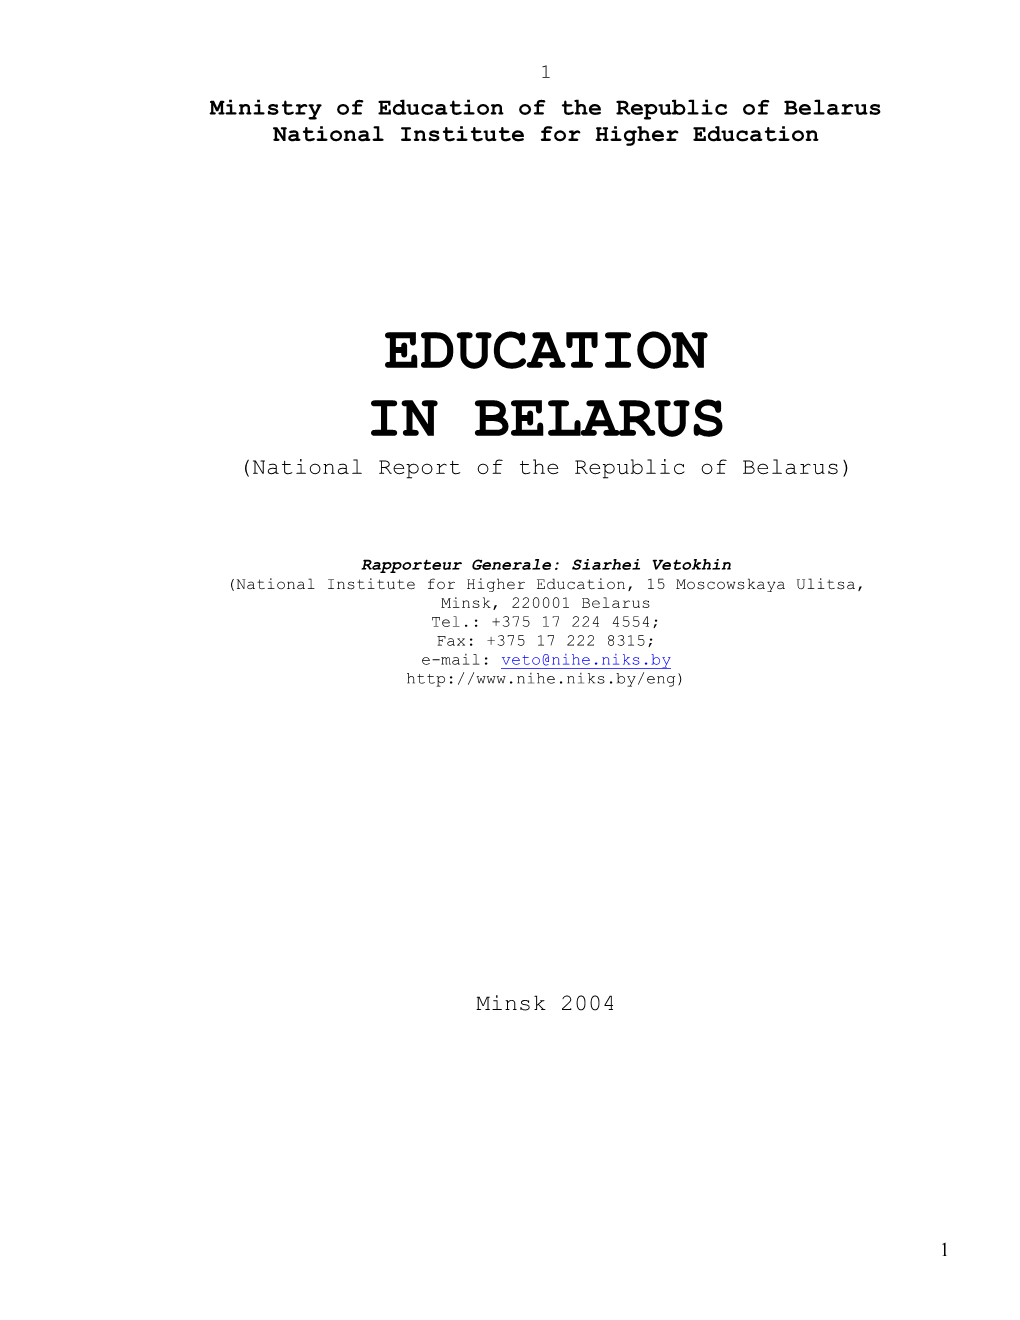 Education in Belarus: National Report of the Republic of Belarus/ Repporteur Generale Siarhei Vetokhin